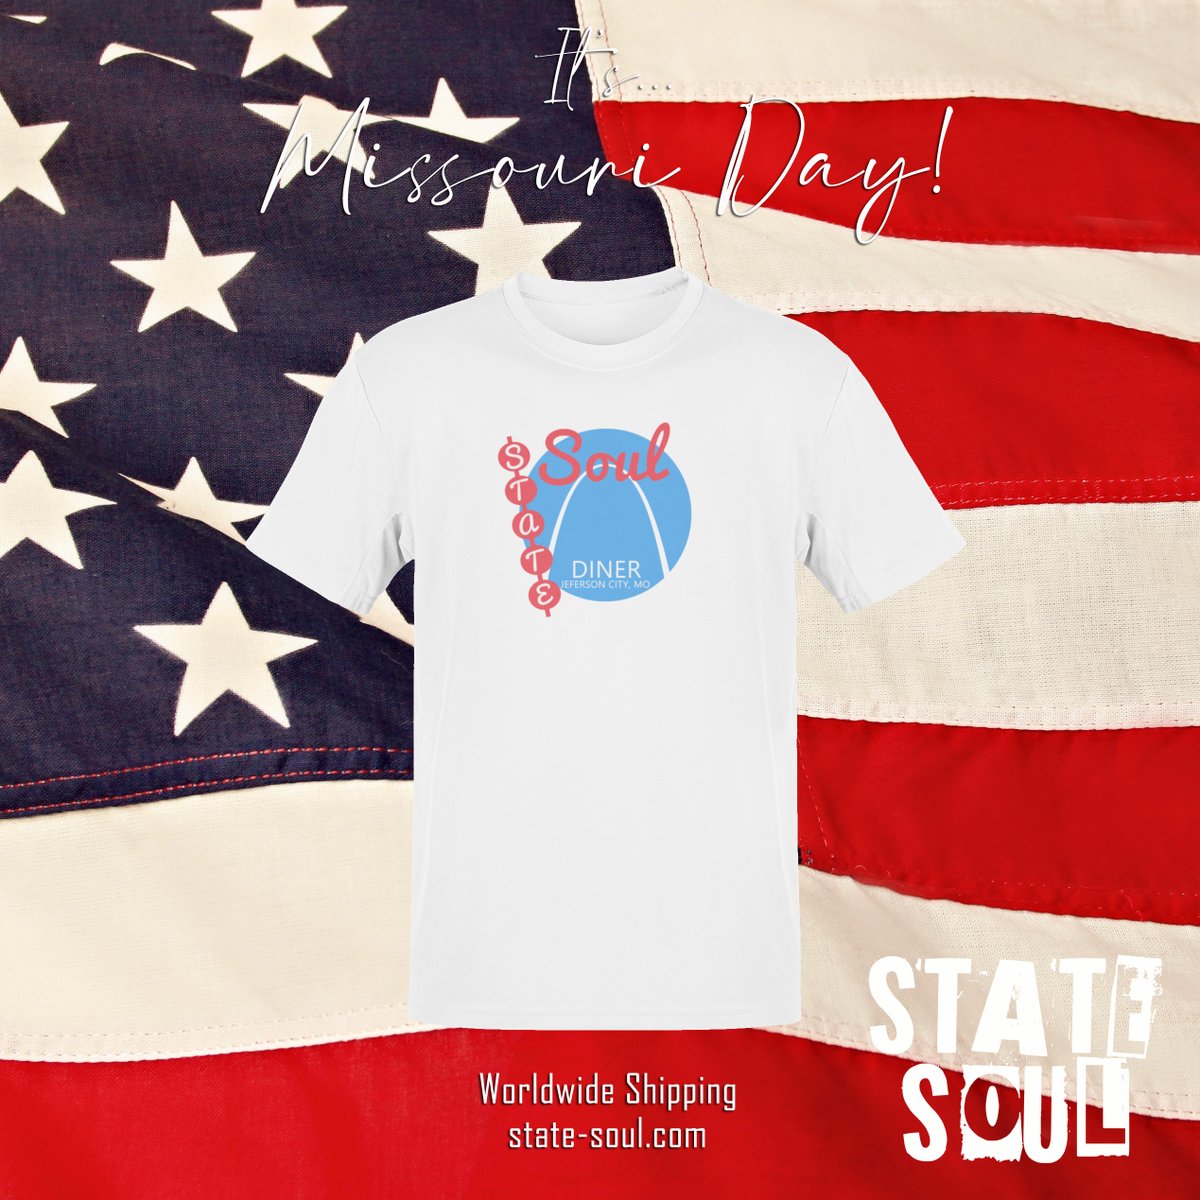 State Soul.... wear everywhere. Worldwide Shipping. state-soul.com
#tshirt #tshirts #tshirtdesign #tshirtshop #tshirtlife #tshirtlovers #tshirtstore #tshirtsale #tshirtdesigner #tshirtstyle #Missouri #missouricity #missourilife #MissouriState #missourigirl #JeffersonCity